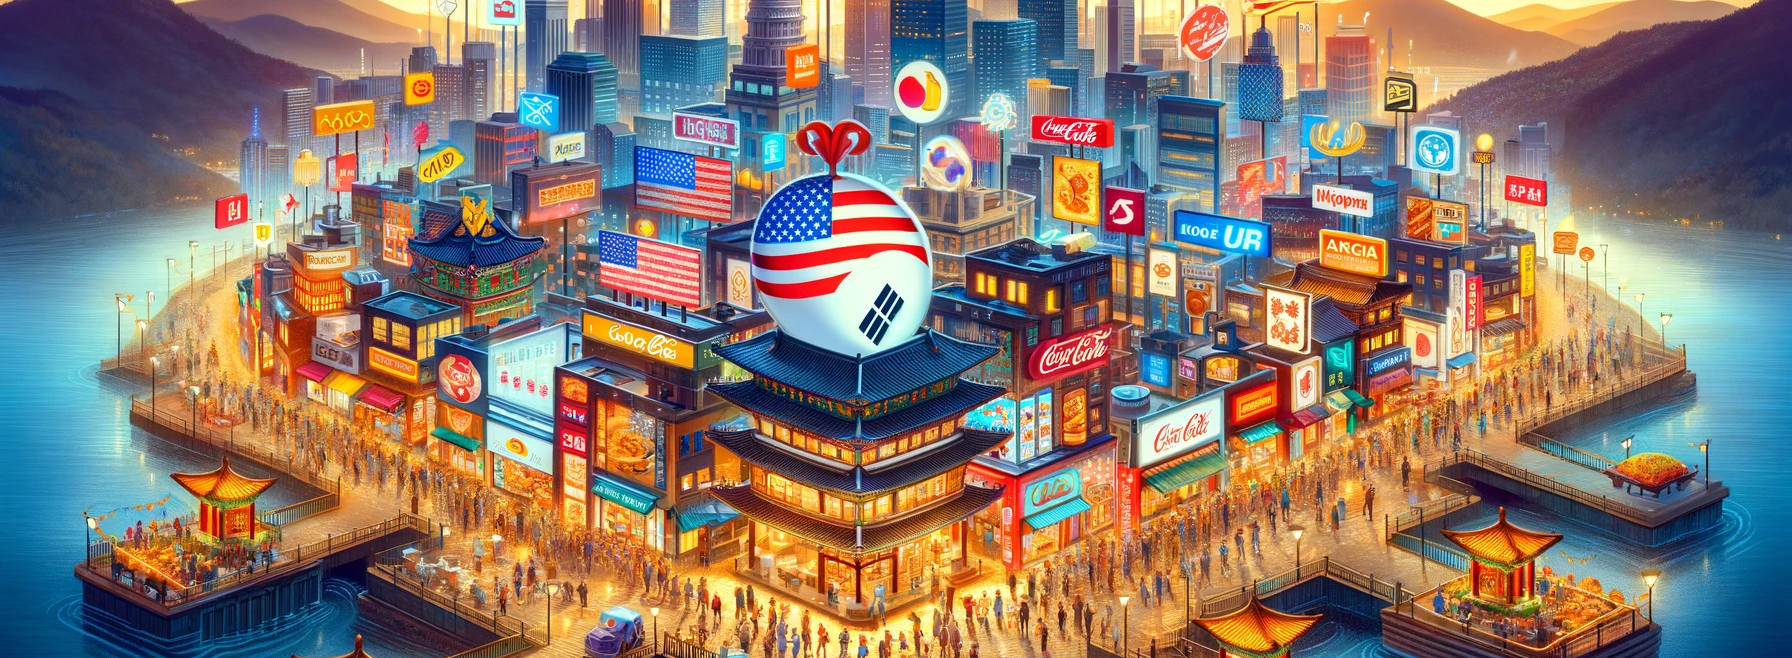 U.S. Franchises in Korea - Challenges in the Management of International Restaurant Franchises